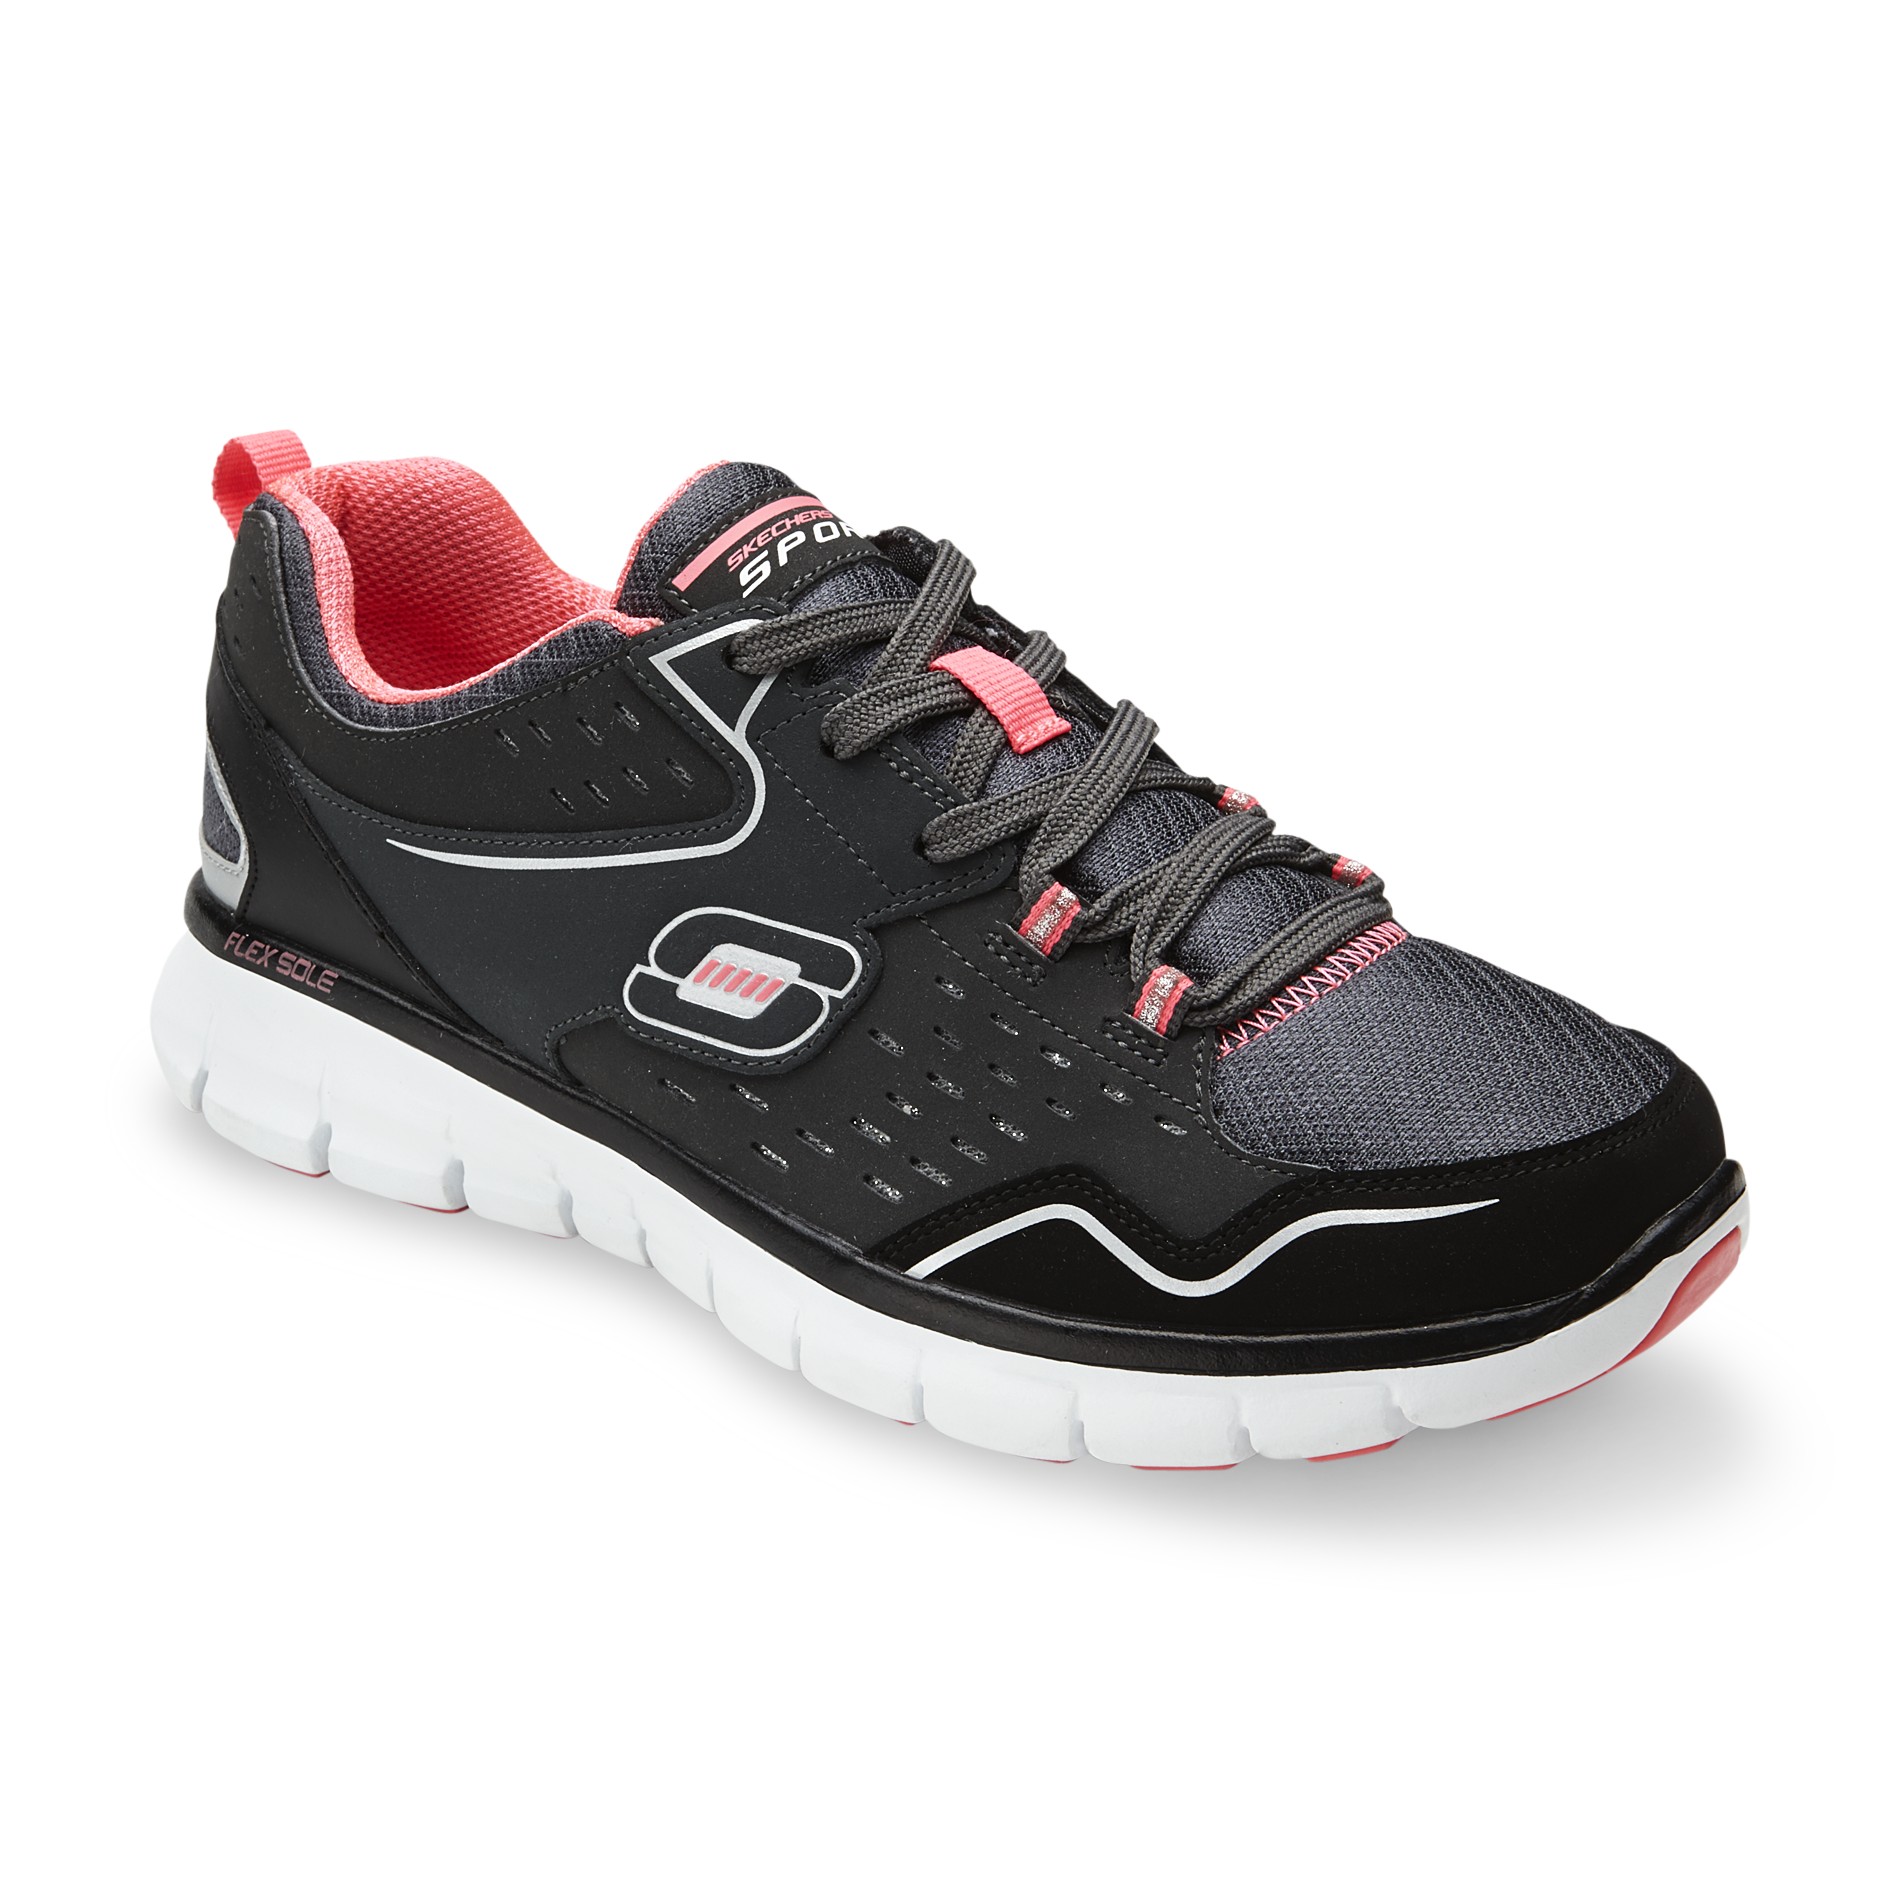 Skechers Women's Front Row Athletic Shoe - Grey/Pink